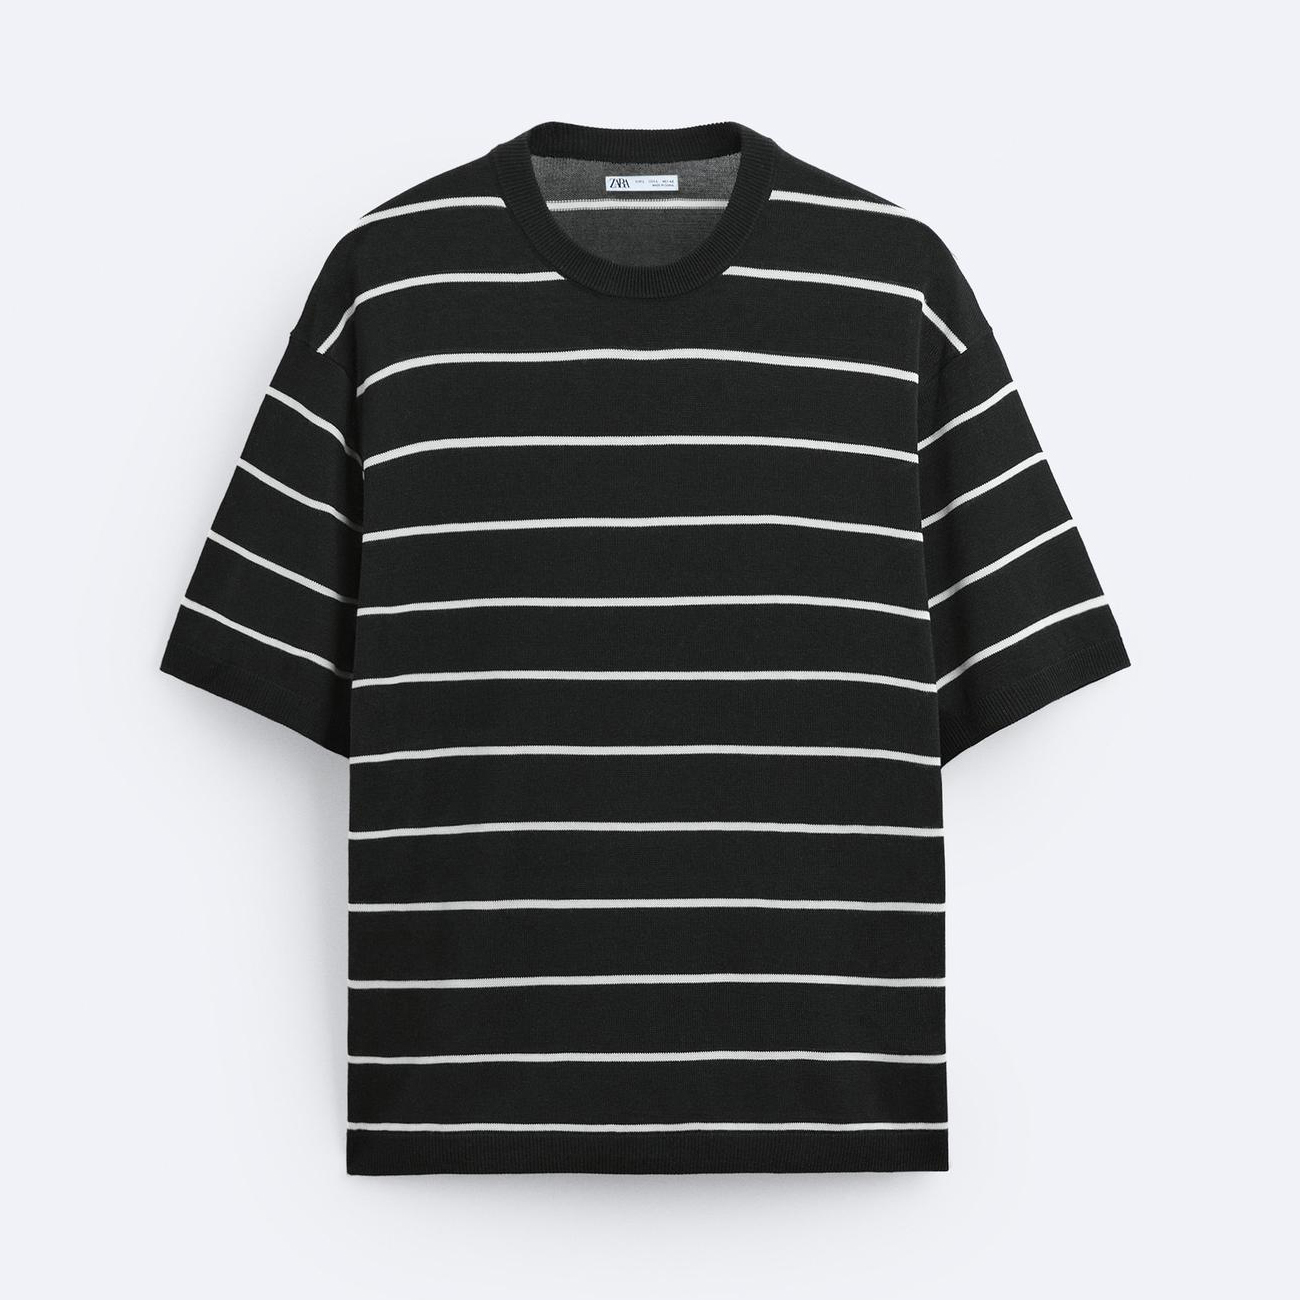 Футболка Zara Striped Textured Knit, черный/белый рубашка zara striped textured голубой